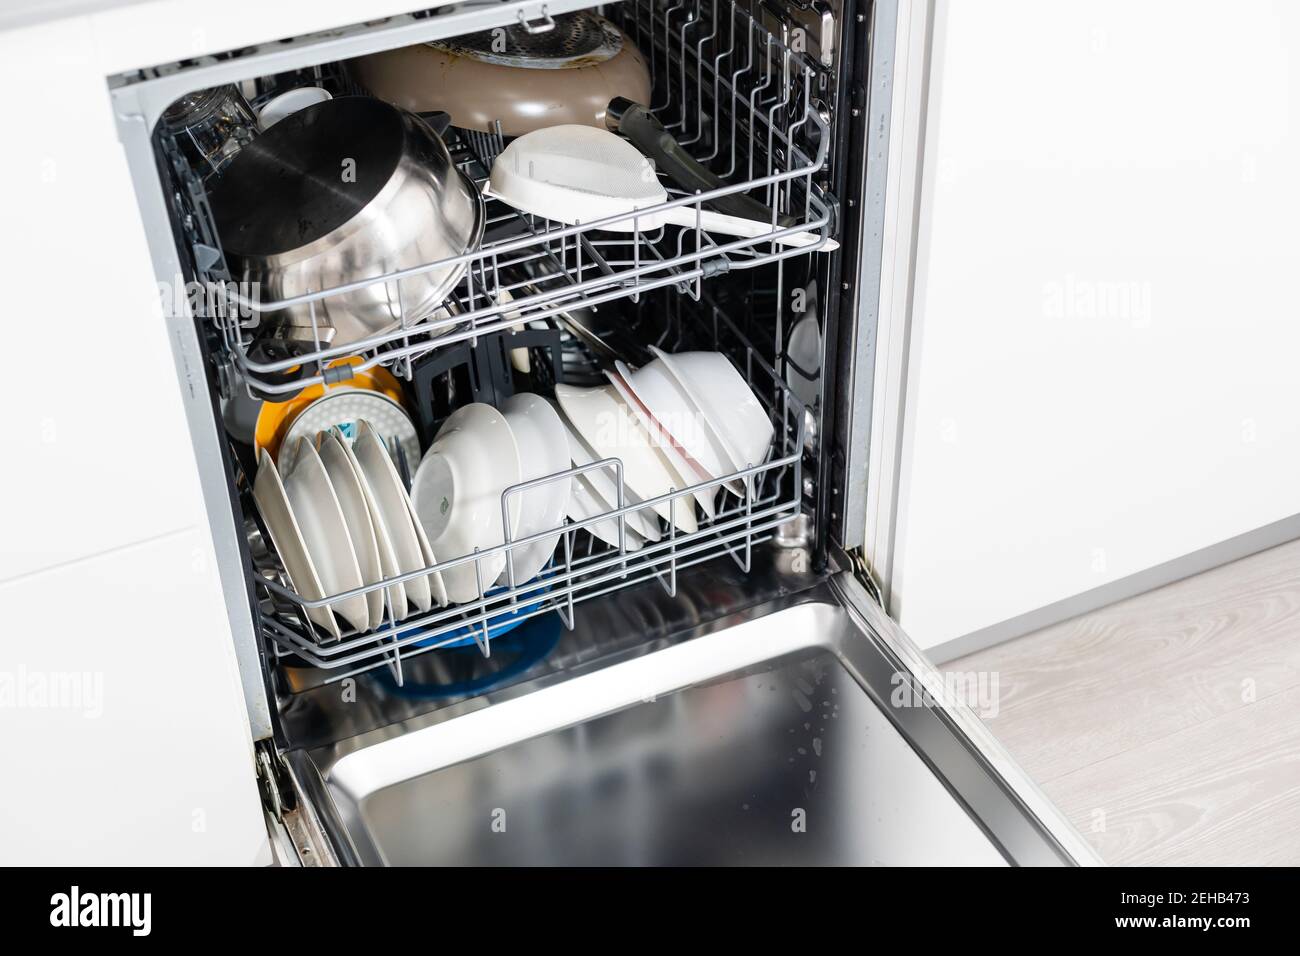 Modern dishwasher open, technology, kitchen. Stock Photo